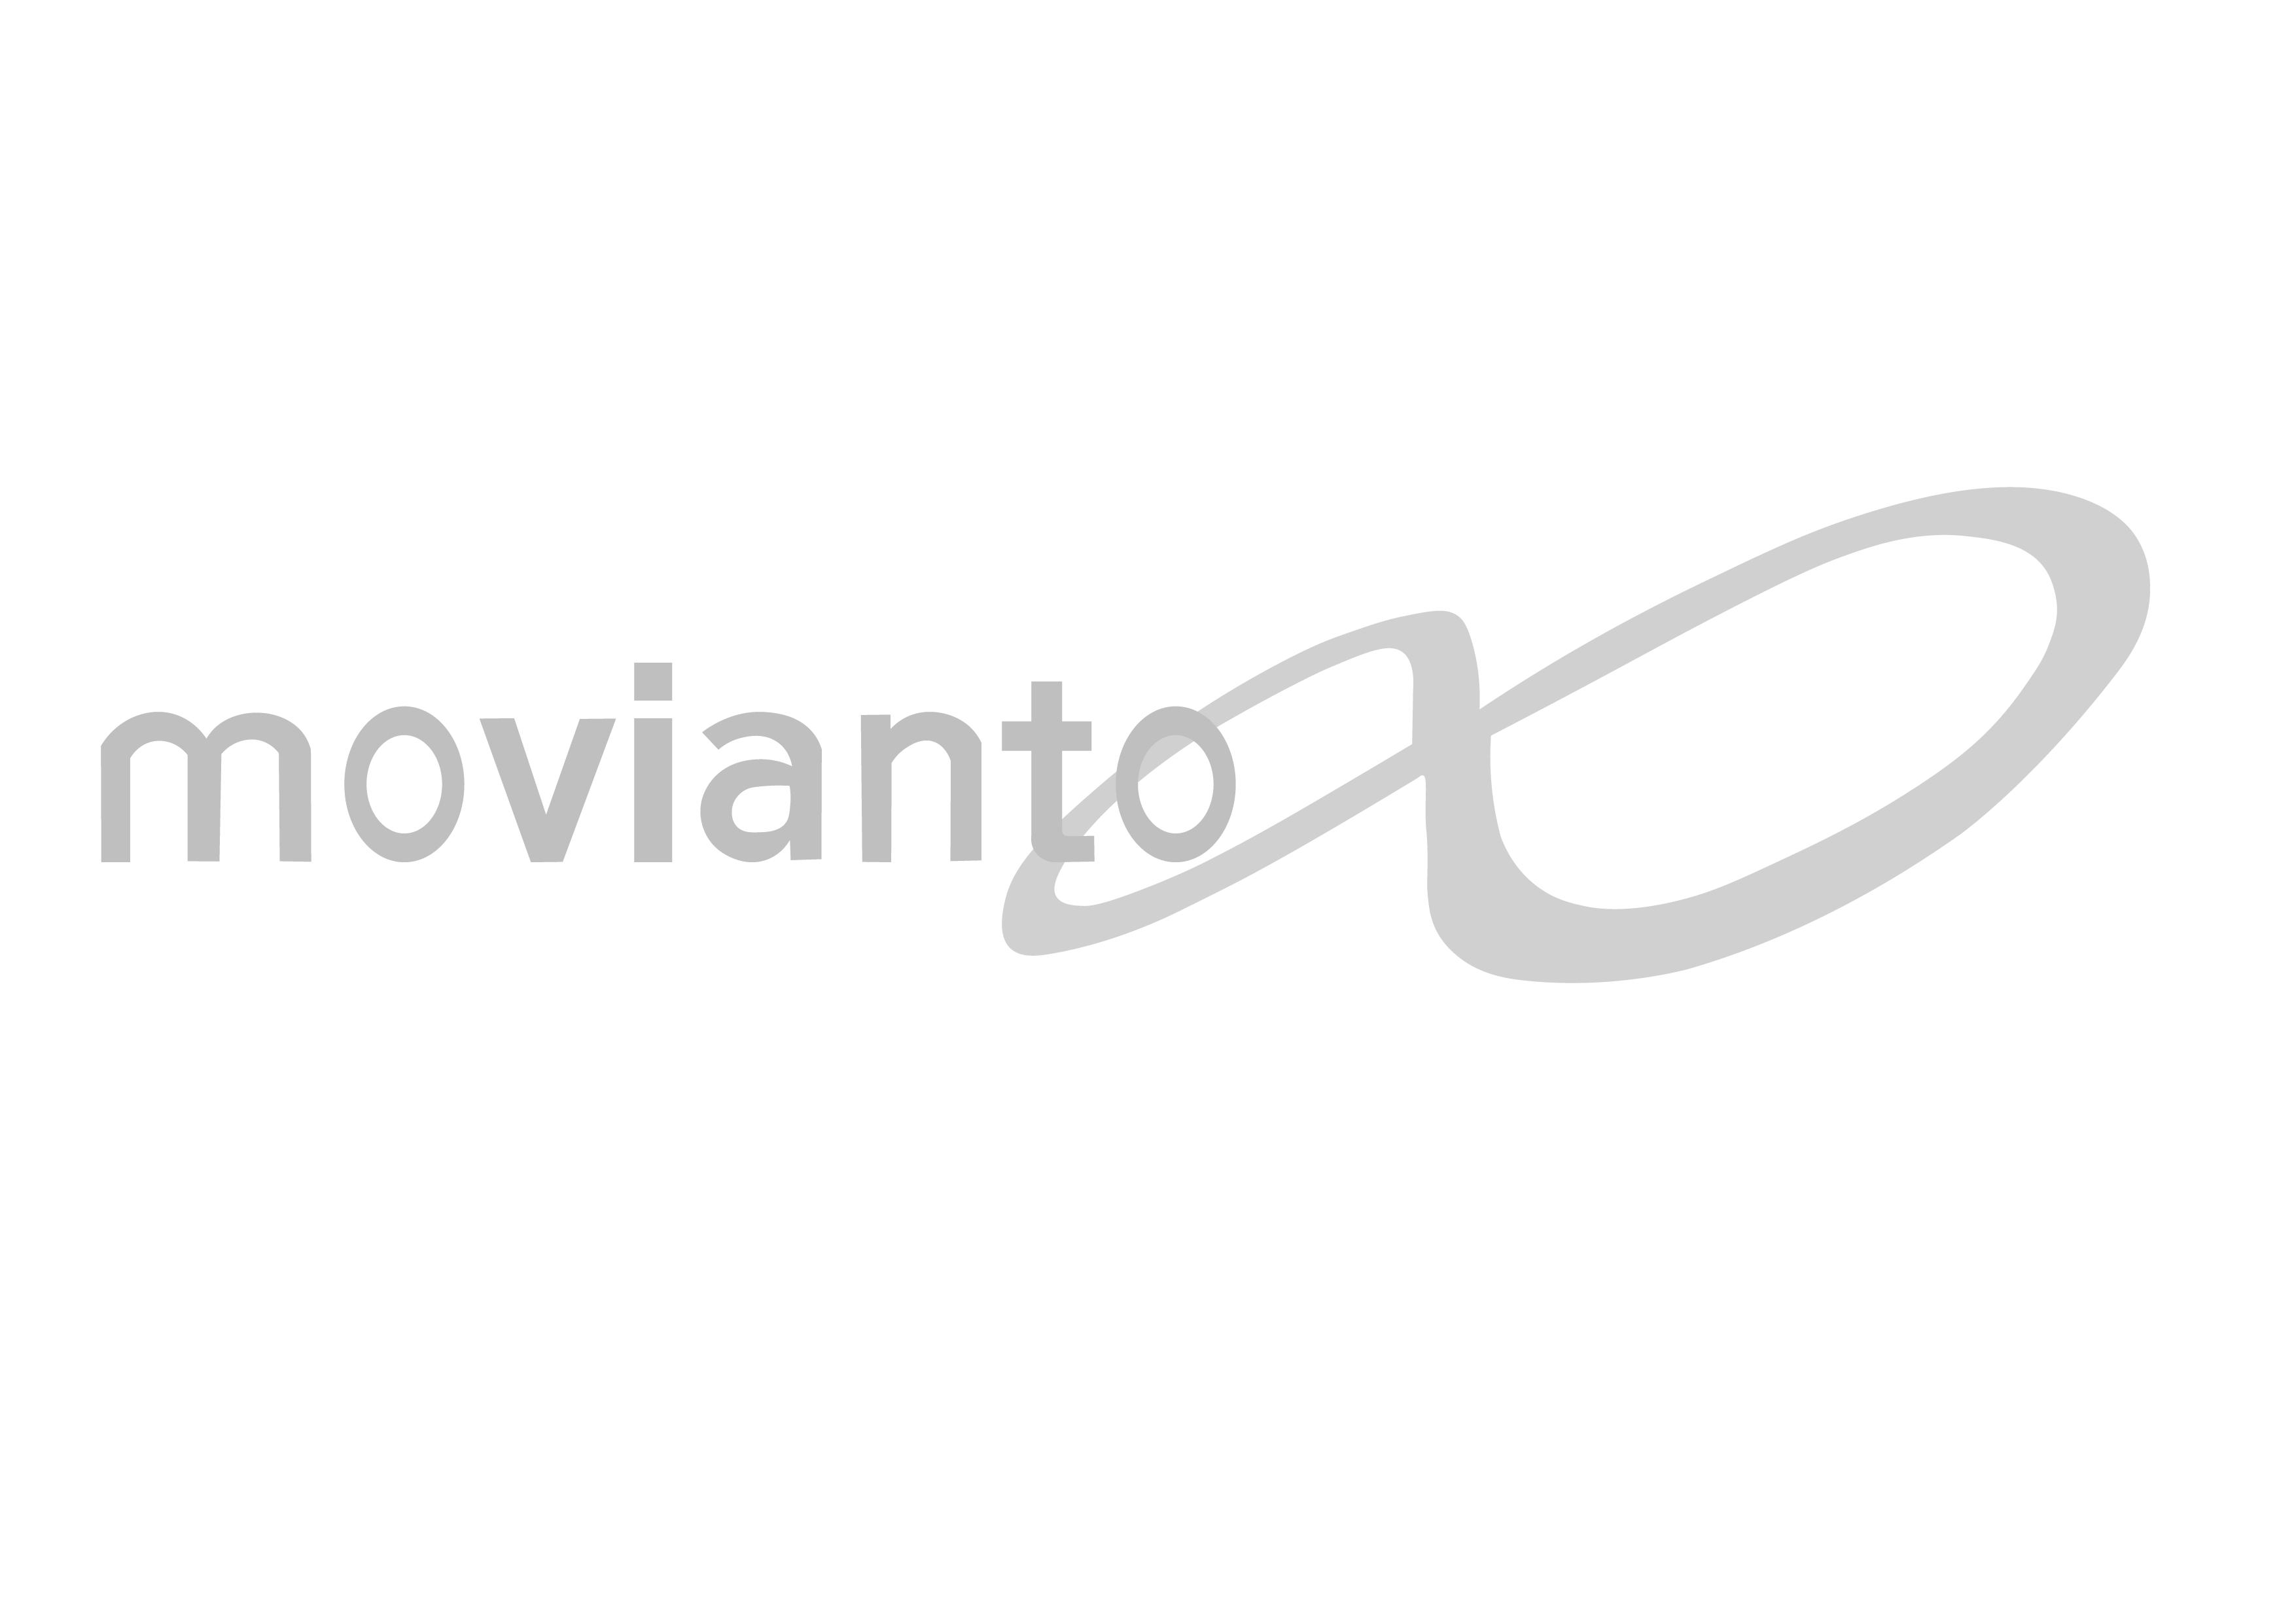 Movianto